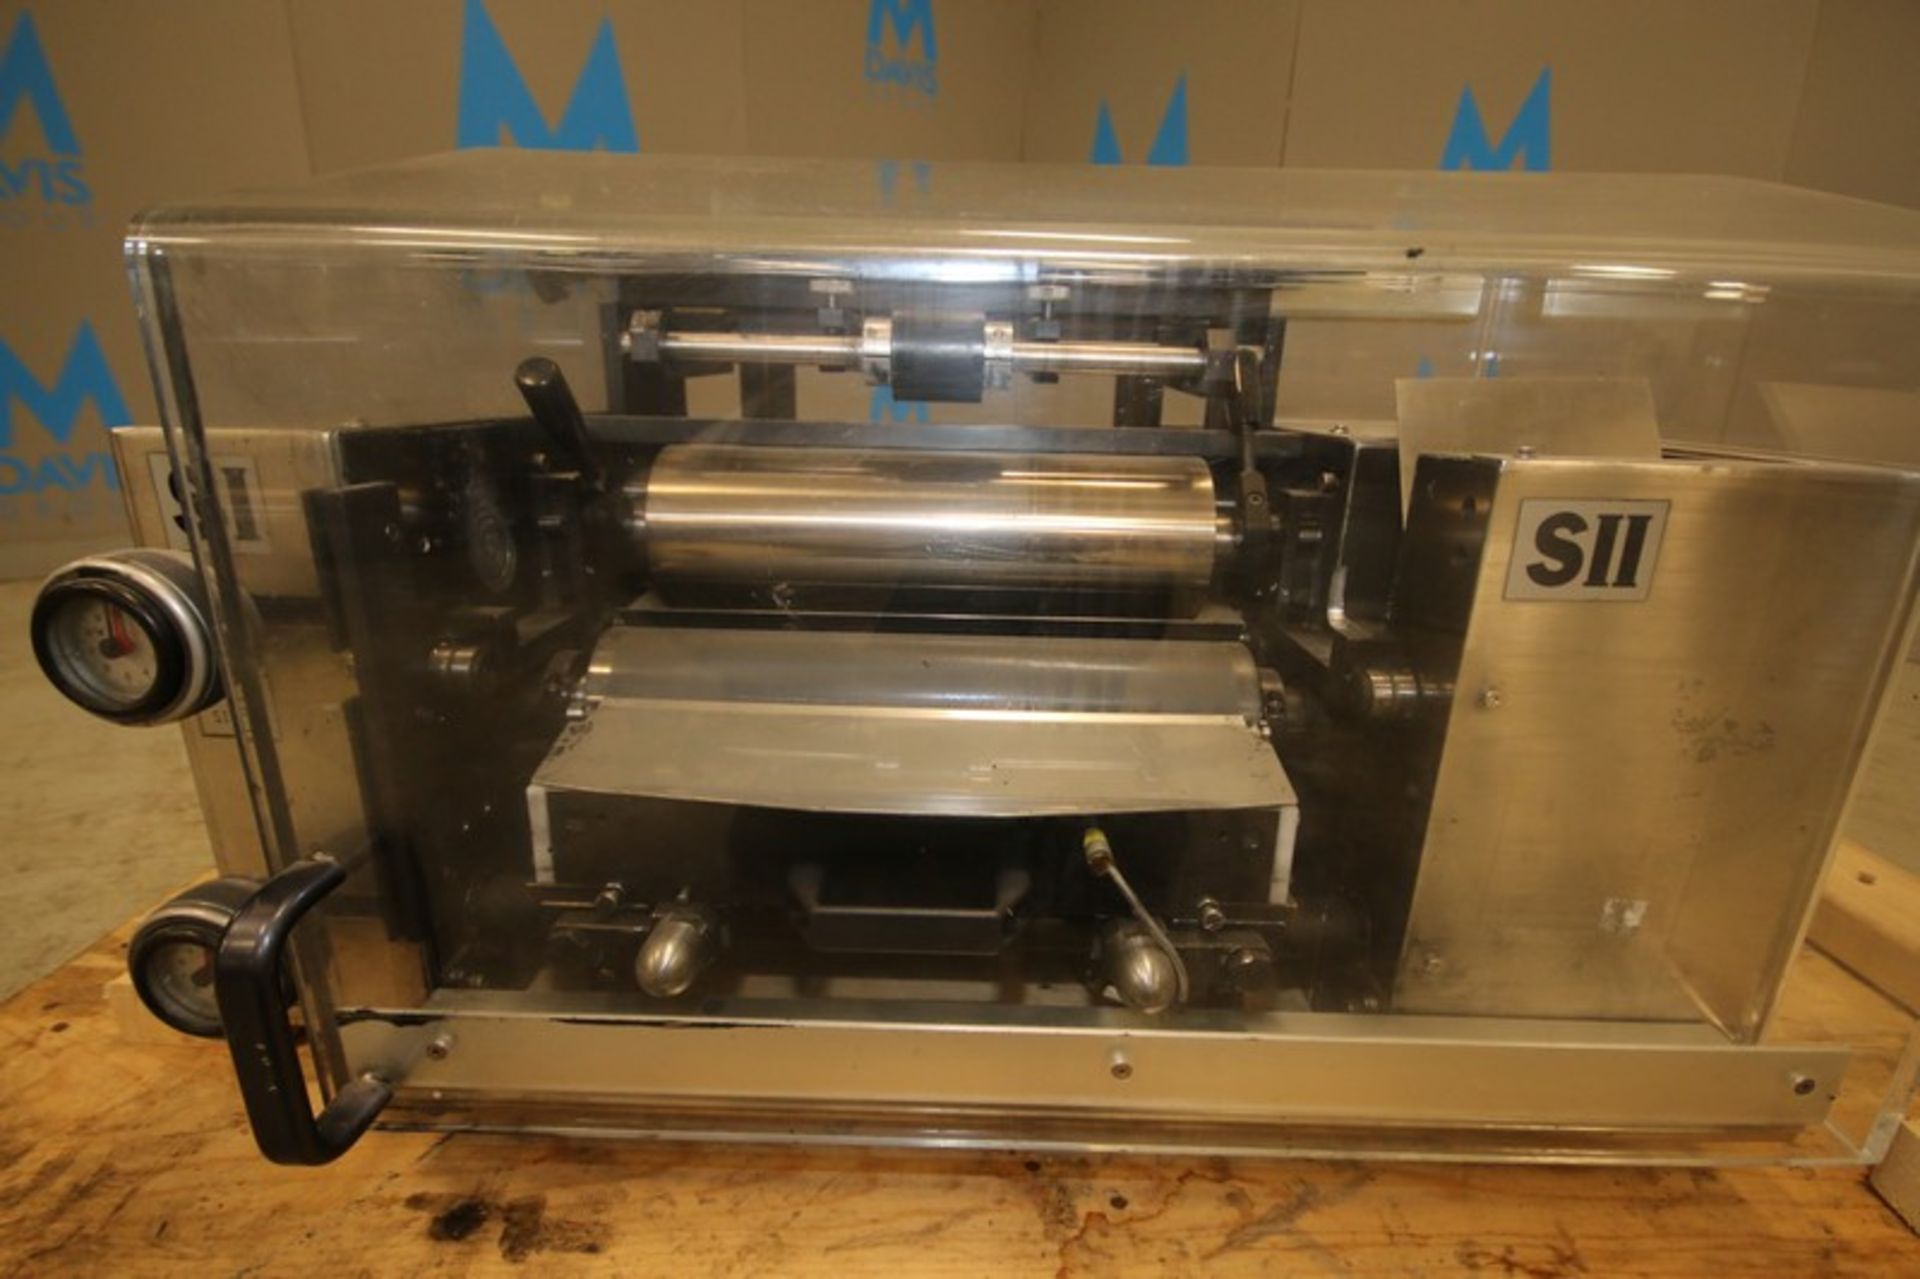 Metronic inPrint 310 UV Printer, 12" W, ID# MF831018-S018-02, with UV Dryer ID #XTR0003900, 208V, - Image 2 of 8